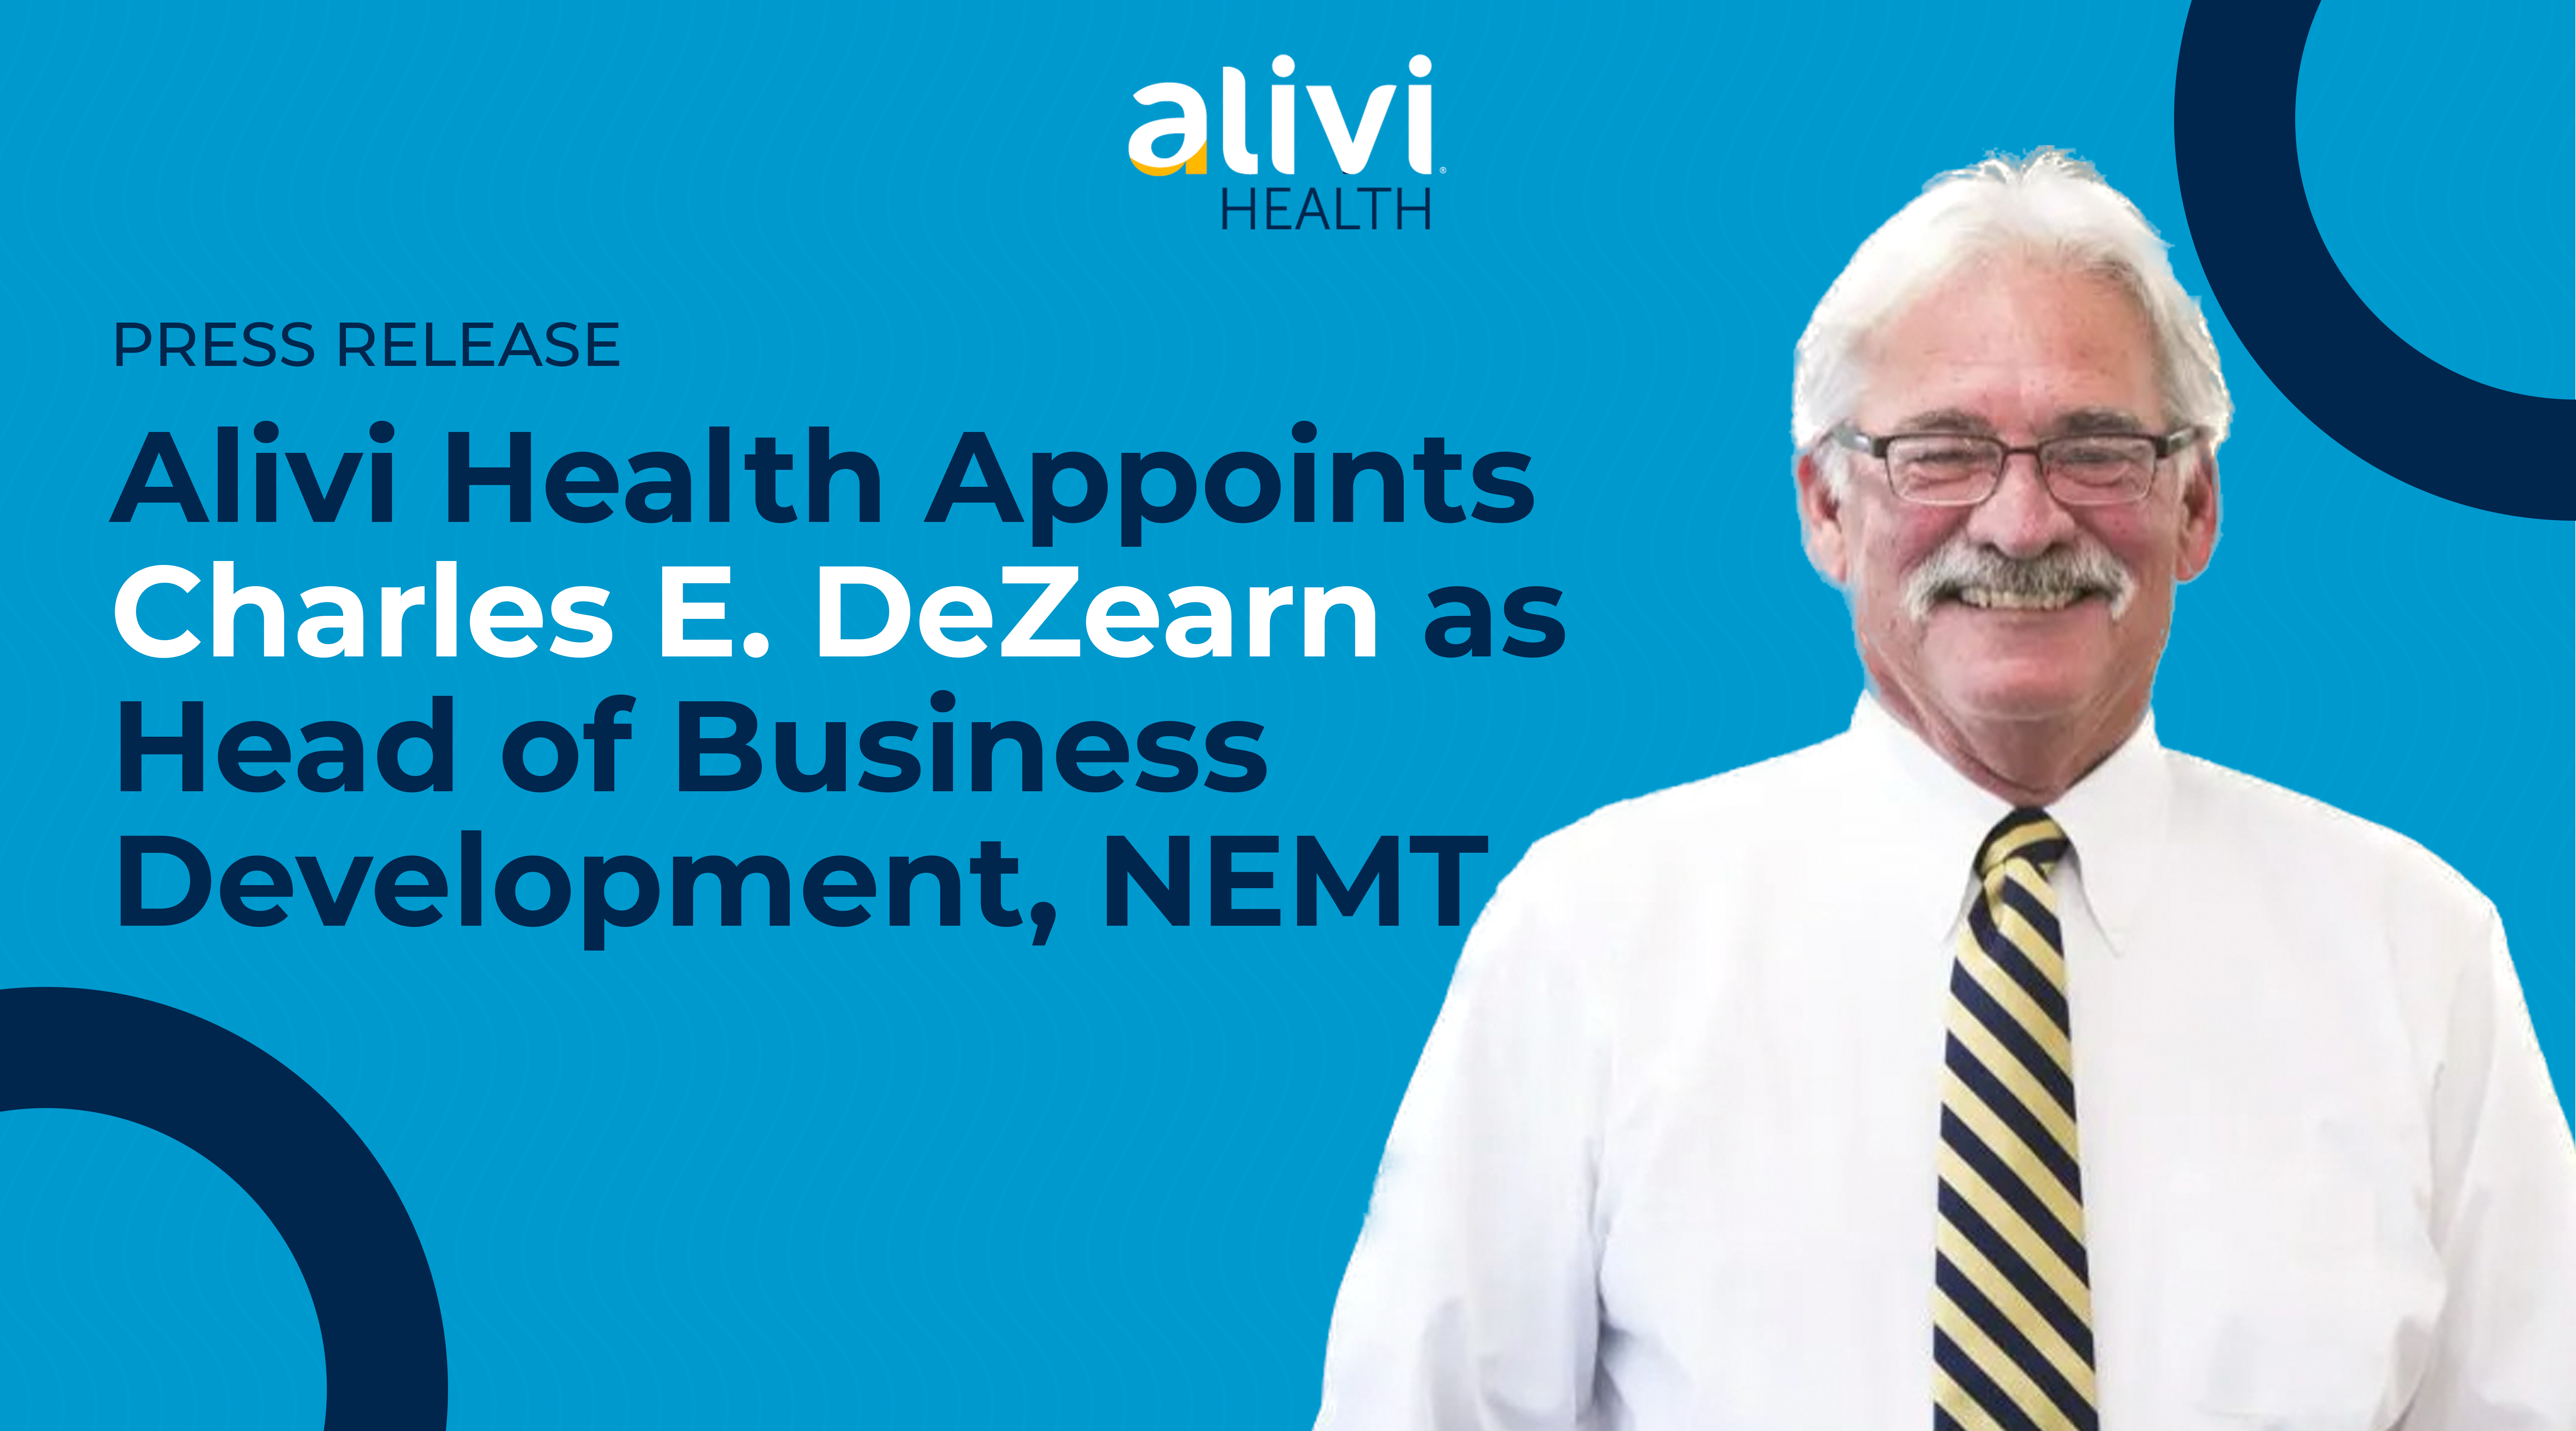 Alivi Health Appoints Charles E. DeZearn as Head of Business Development, NEMT